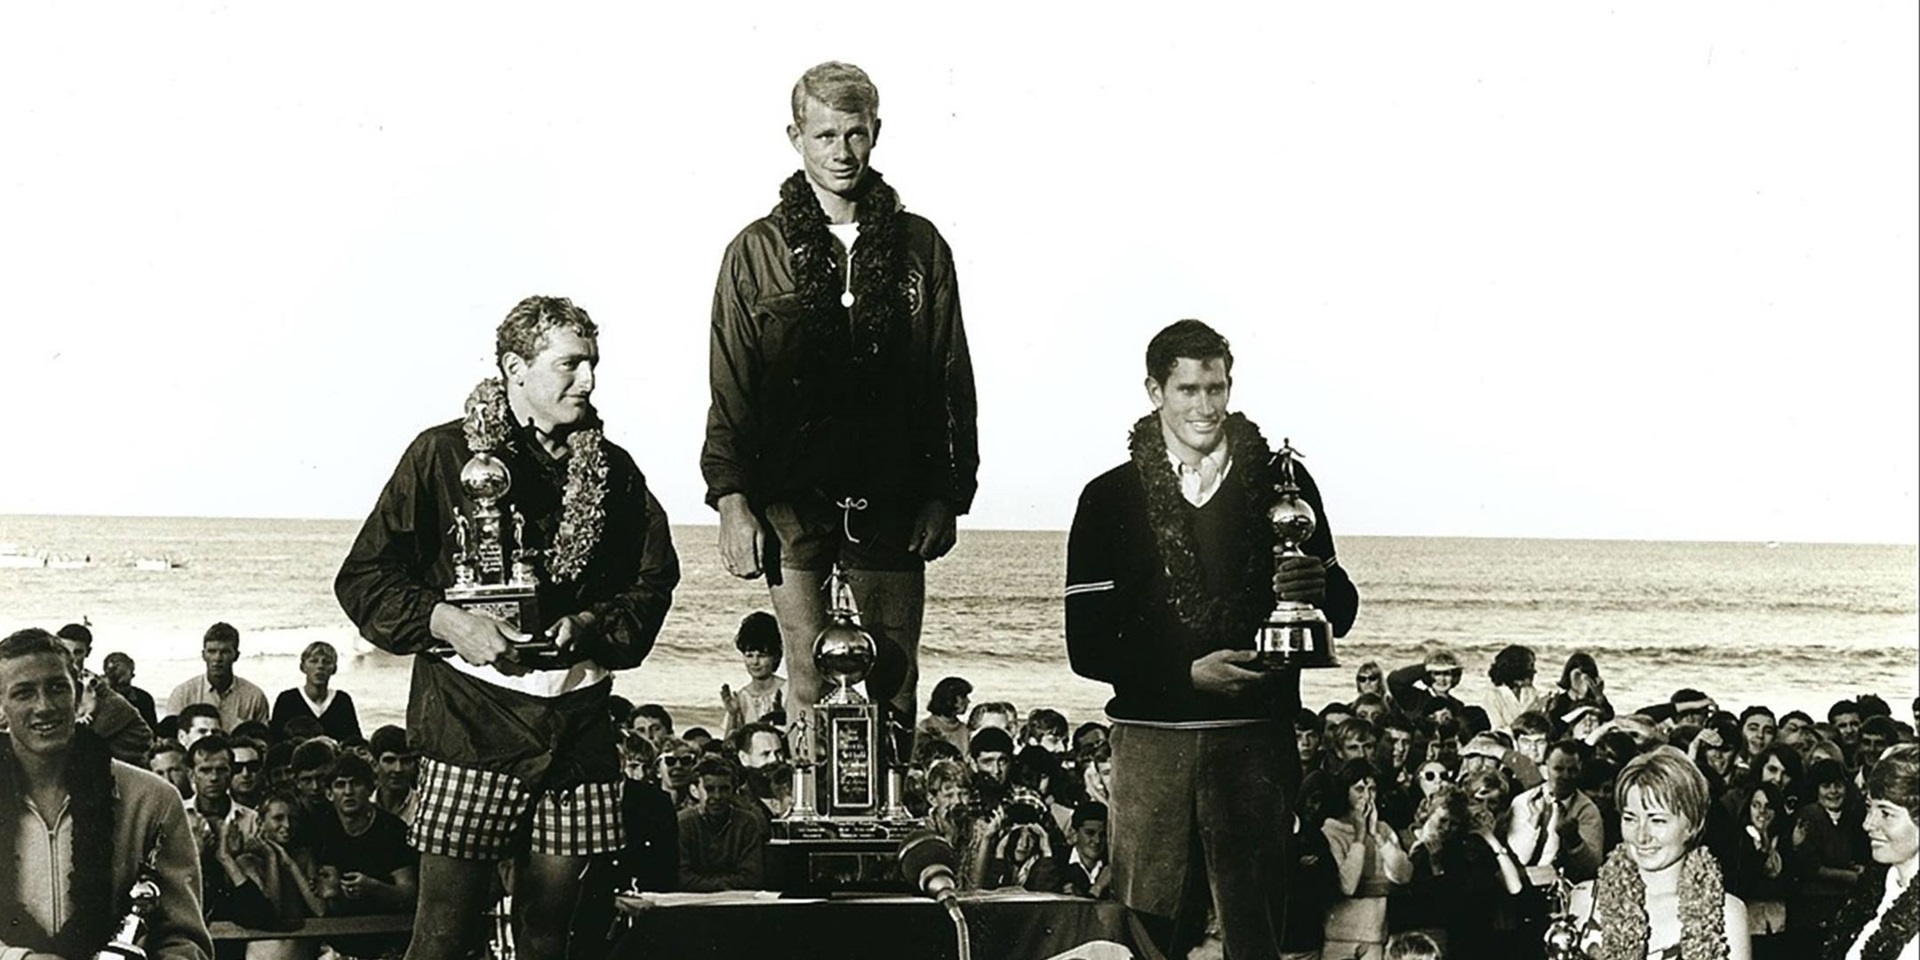 Senior men’s championship winners on the podium: 1 Midget Farrelly, Australia (centre), 2 Mike Doyle, California (left), 3 Joey Cabell, Hawaii (right). 